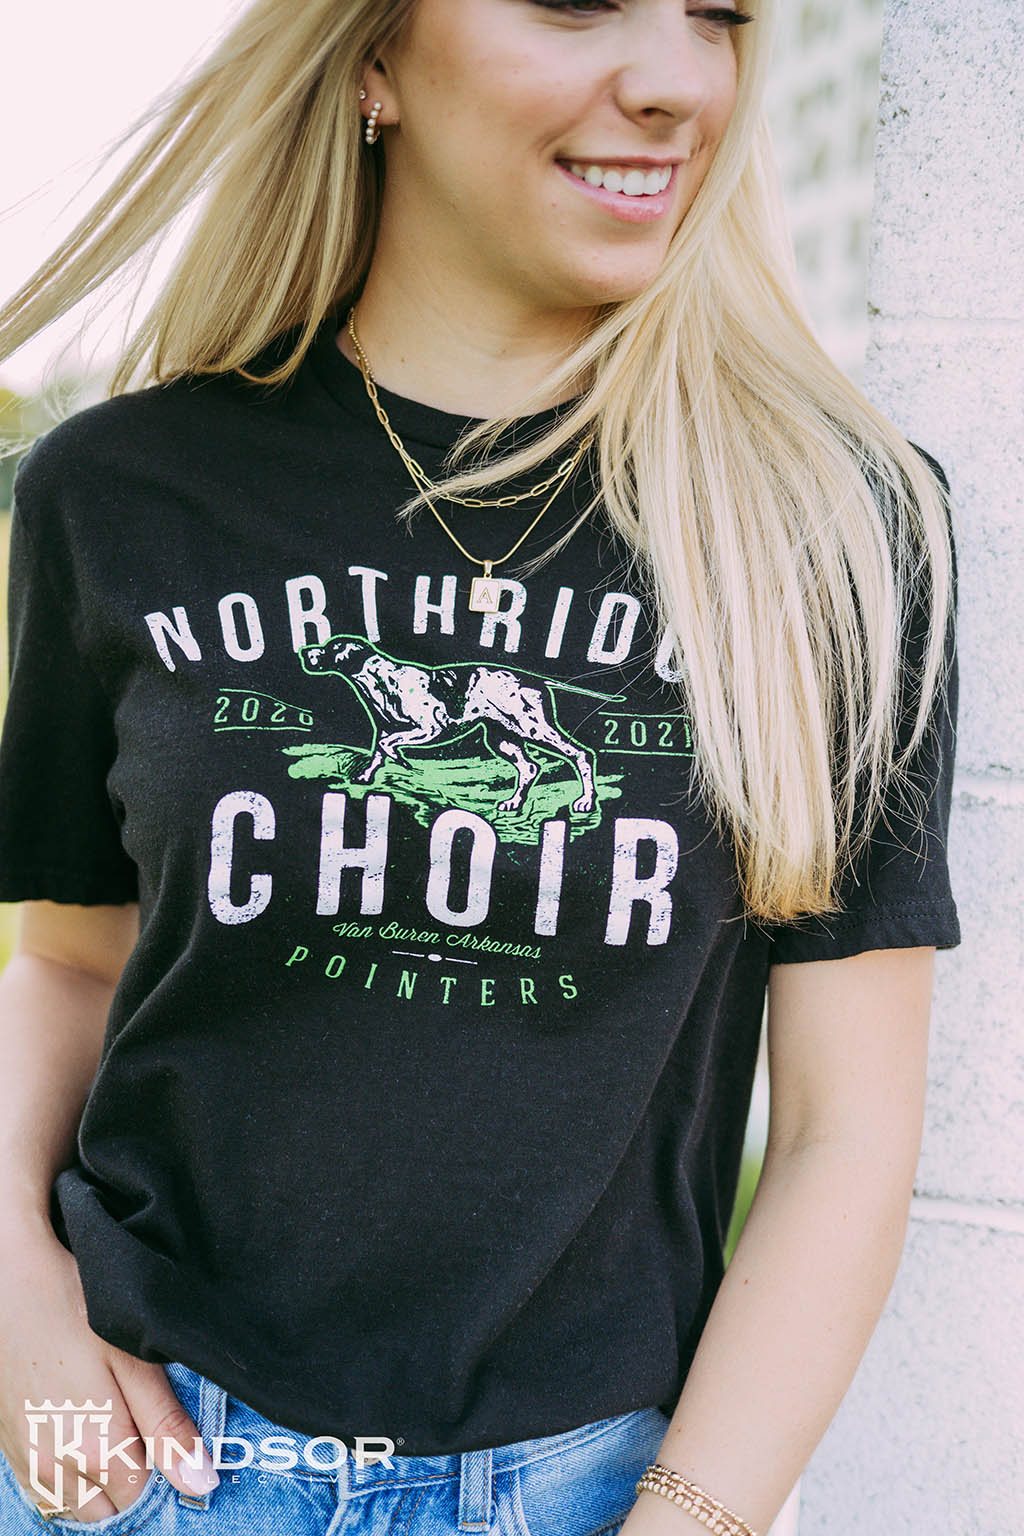 Northridge Middle School Choir Pointer Tshirt